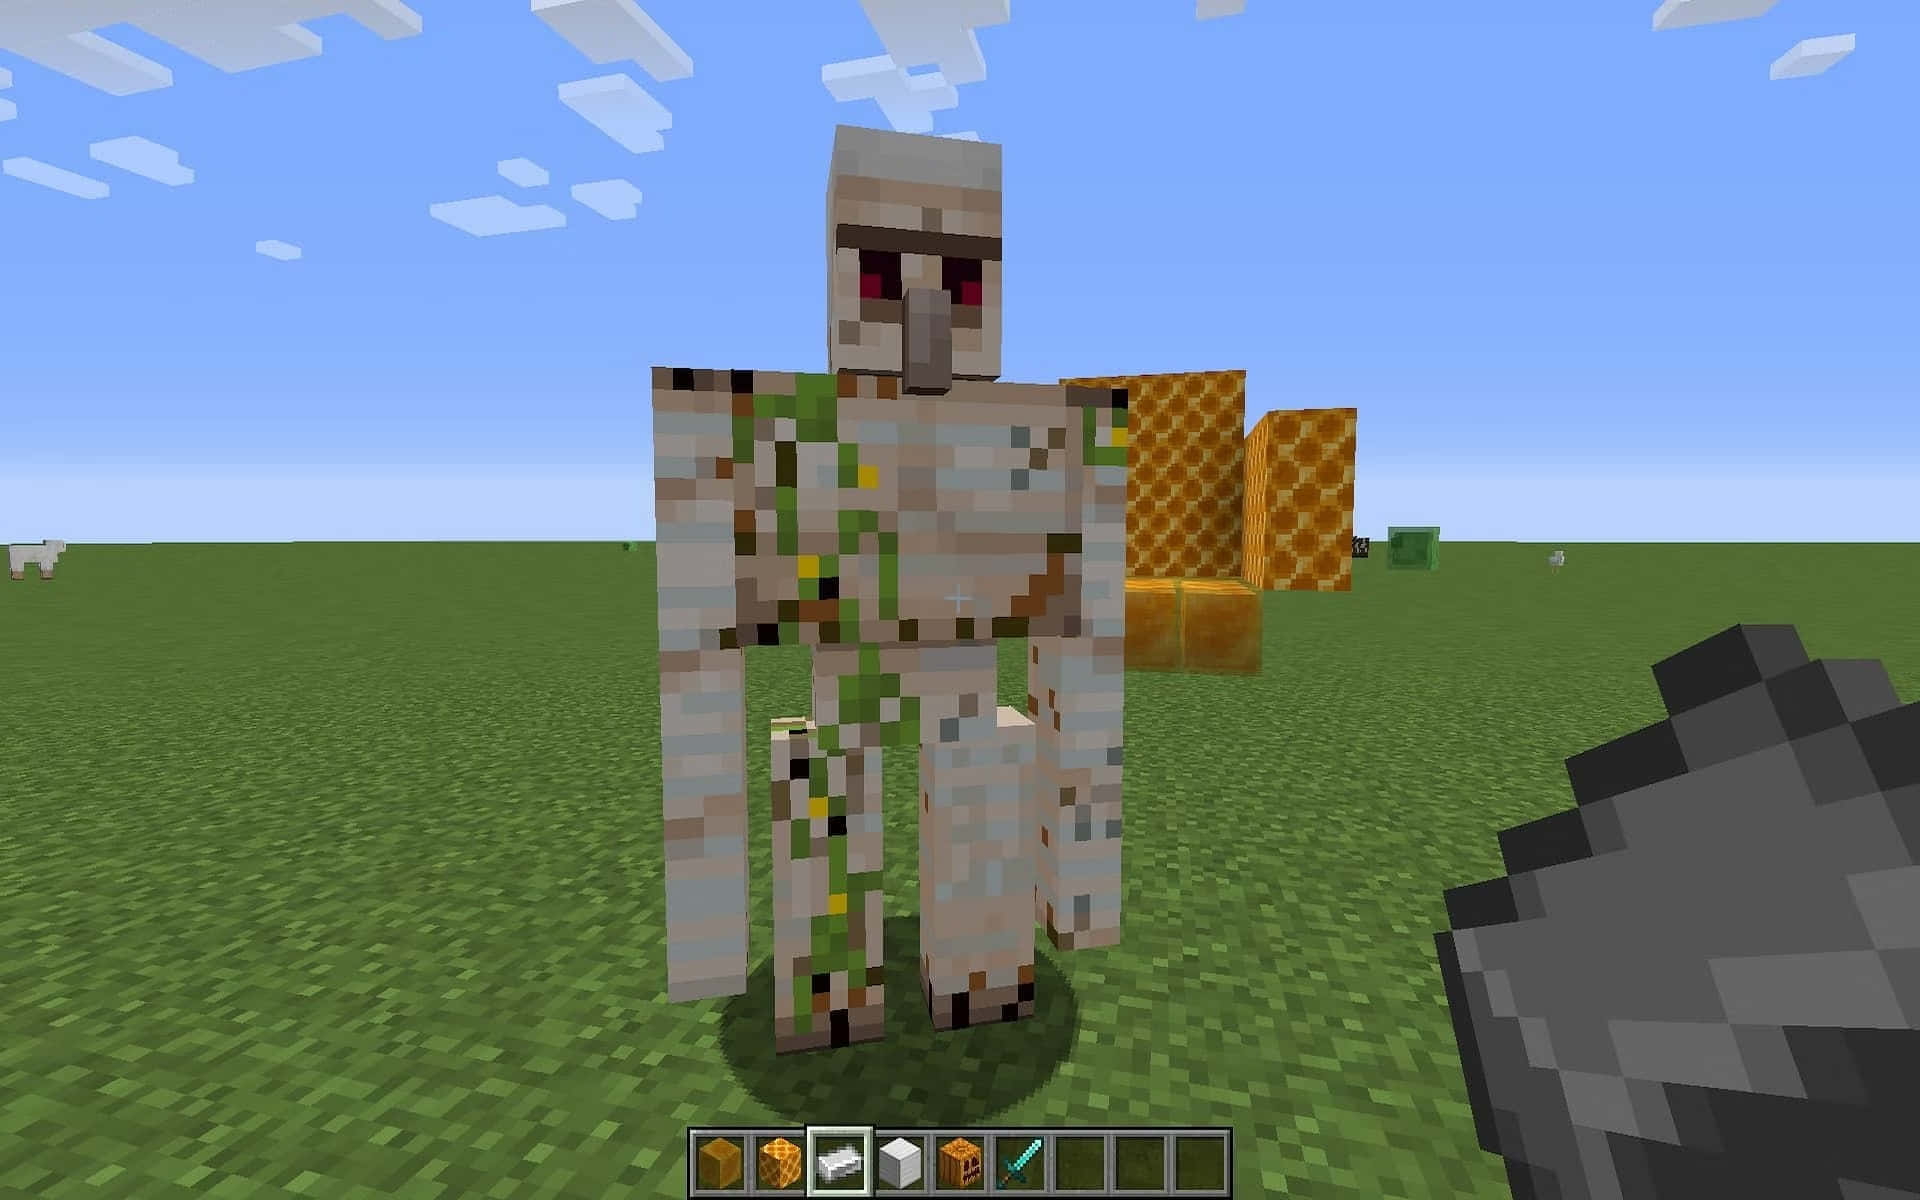 Minecraft Iron Golem standing guard in the village Wallpaper